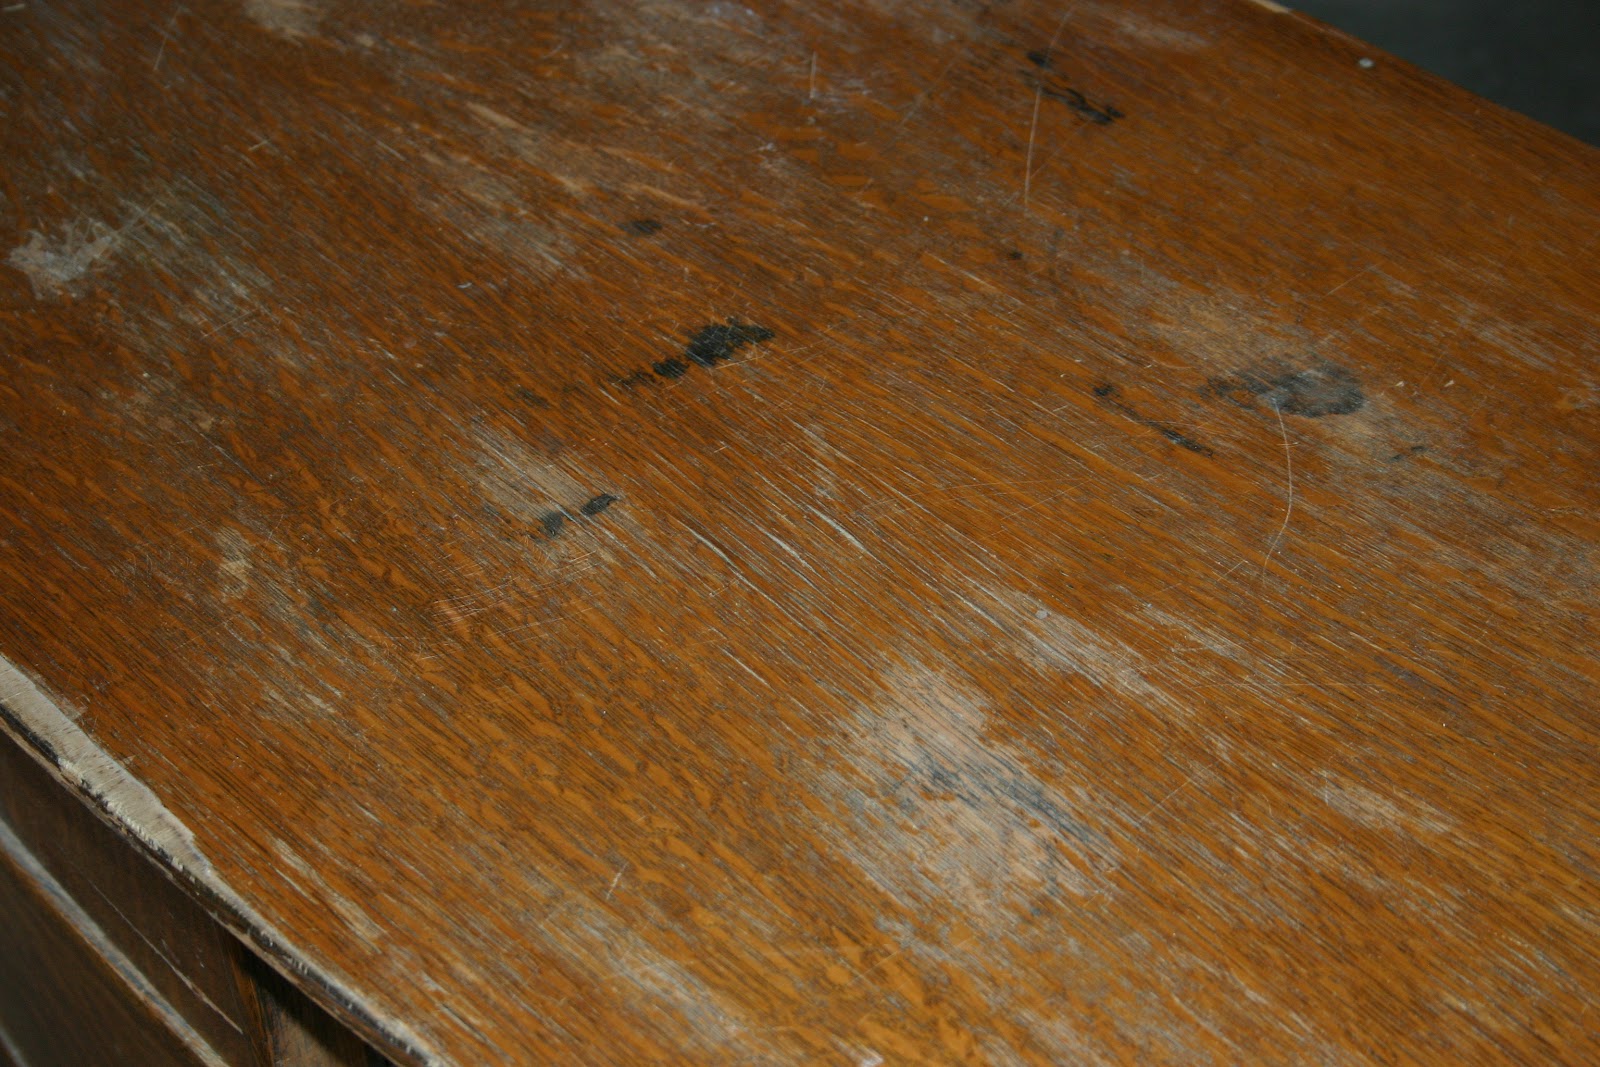 repairing wood veneer furniture